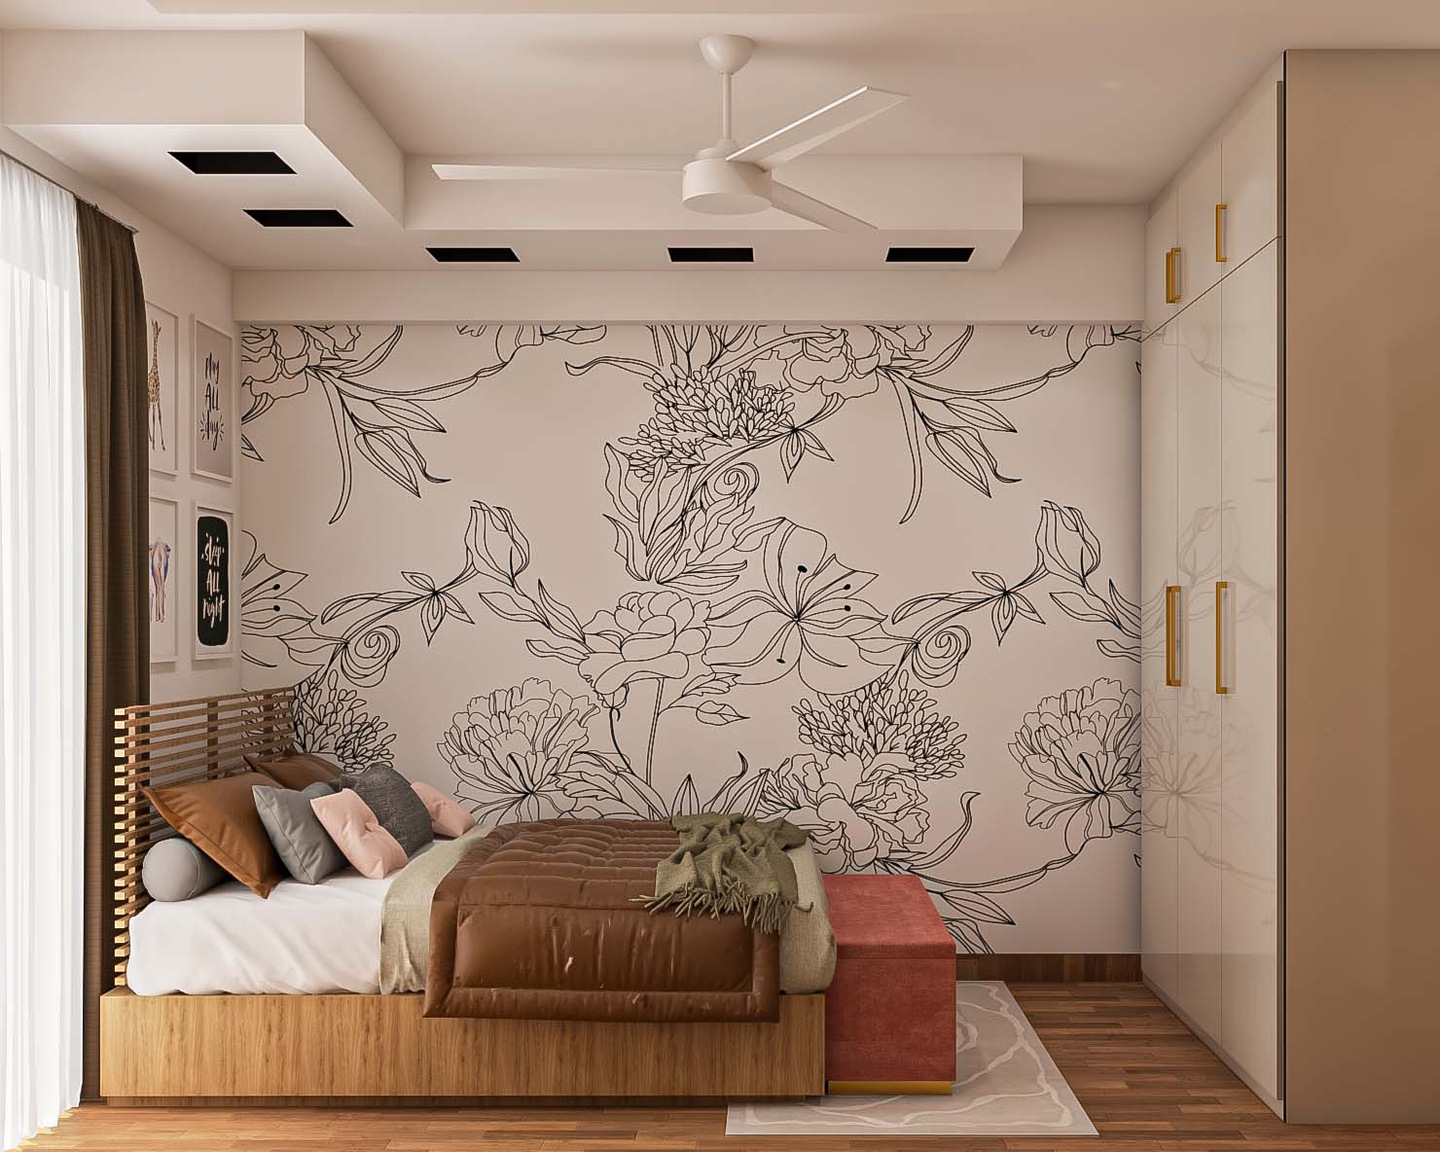 Elegant and Trendy Master Bedroom Design with Floral Wallpaper - Livspace